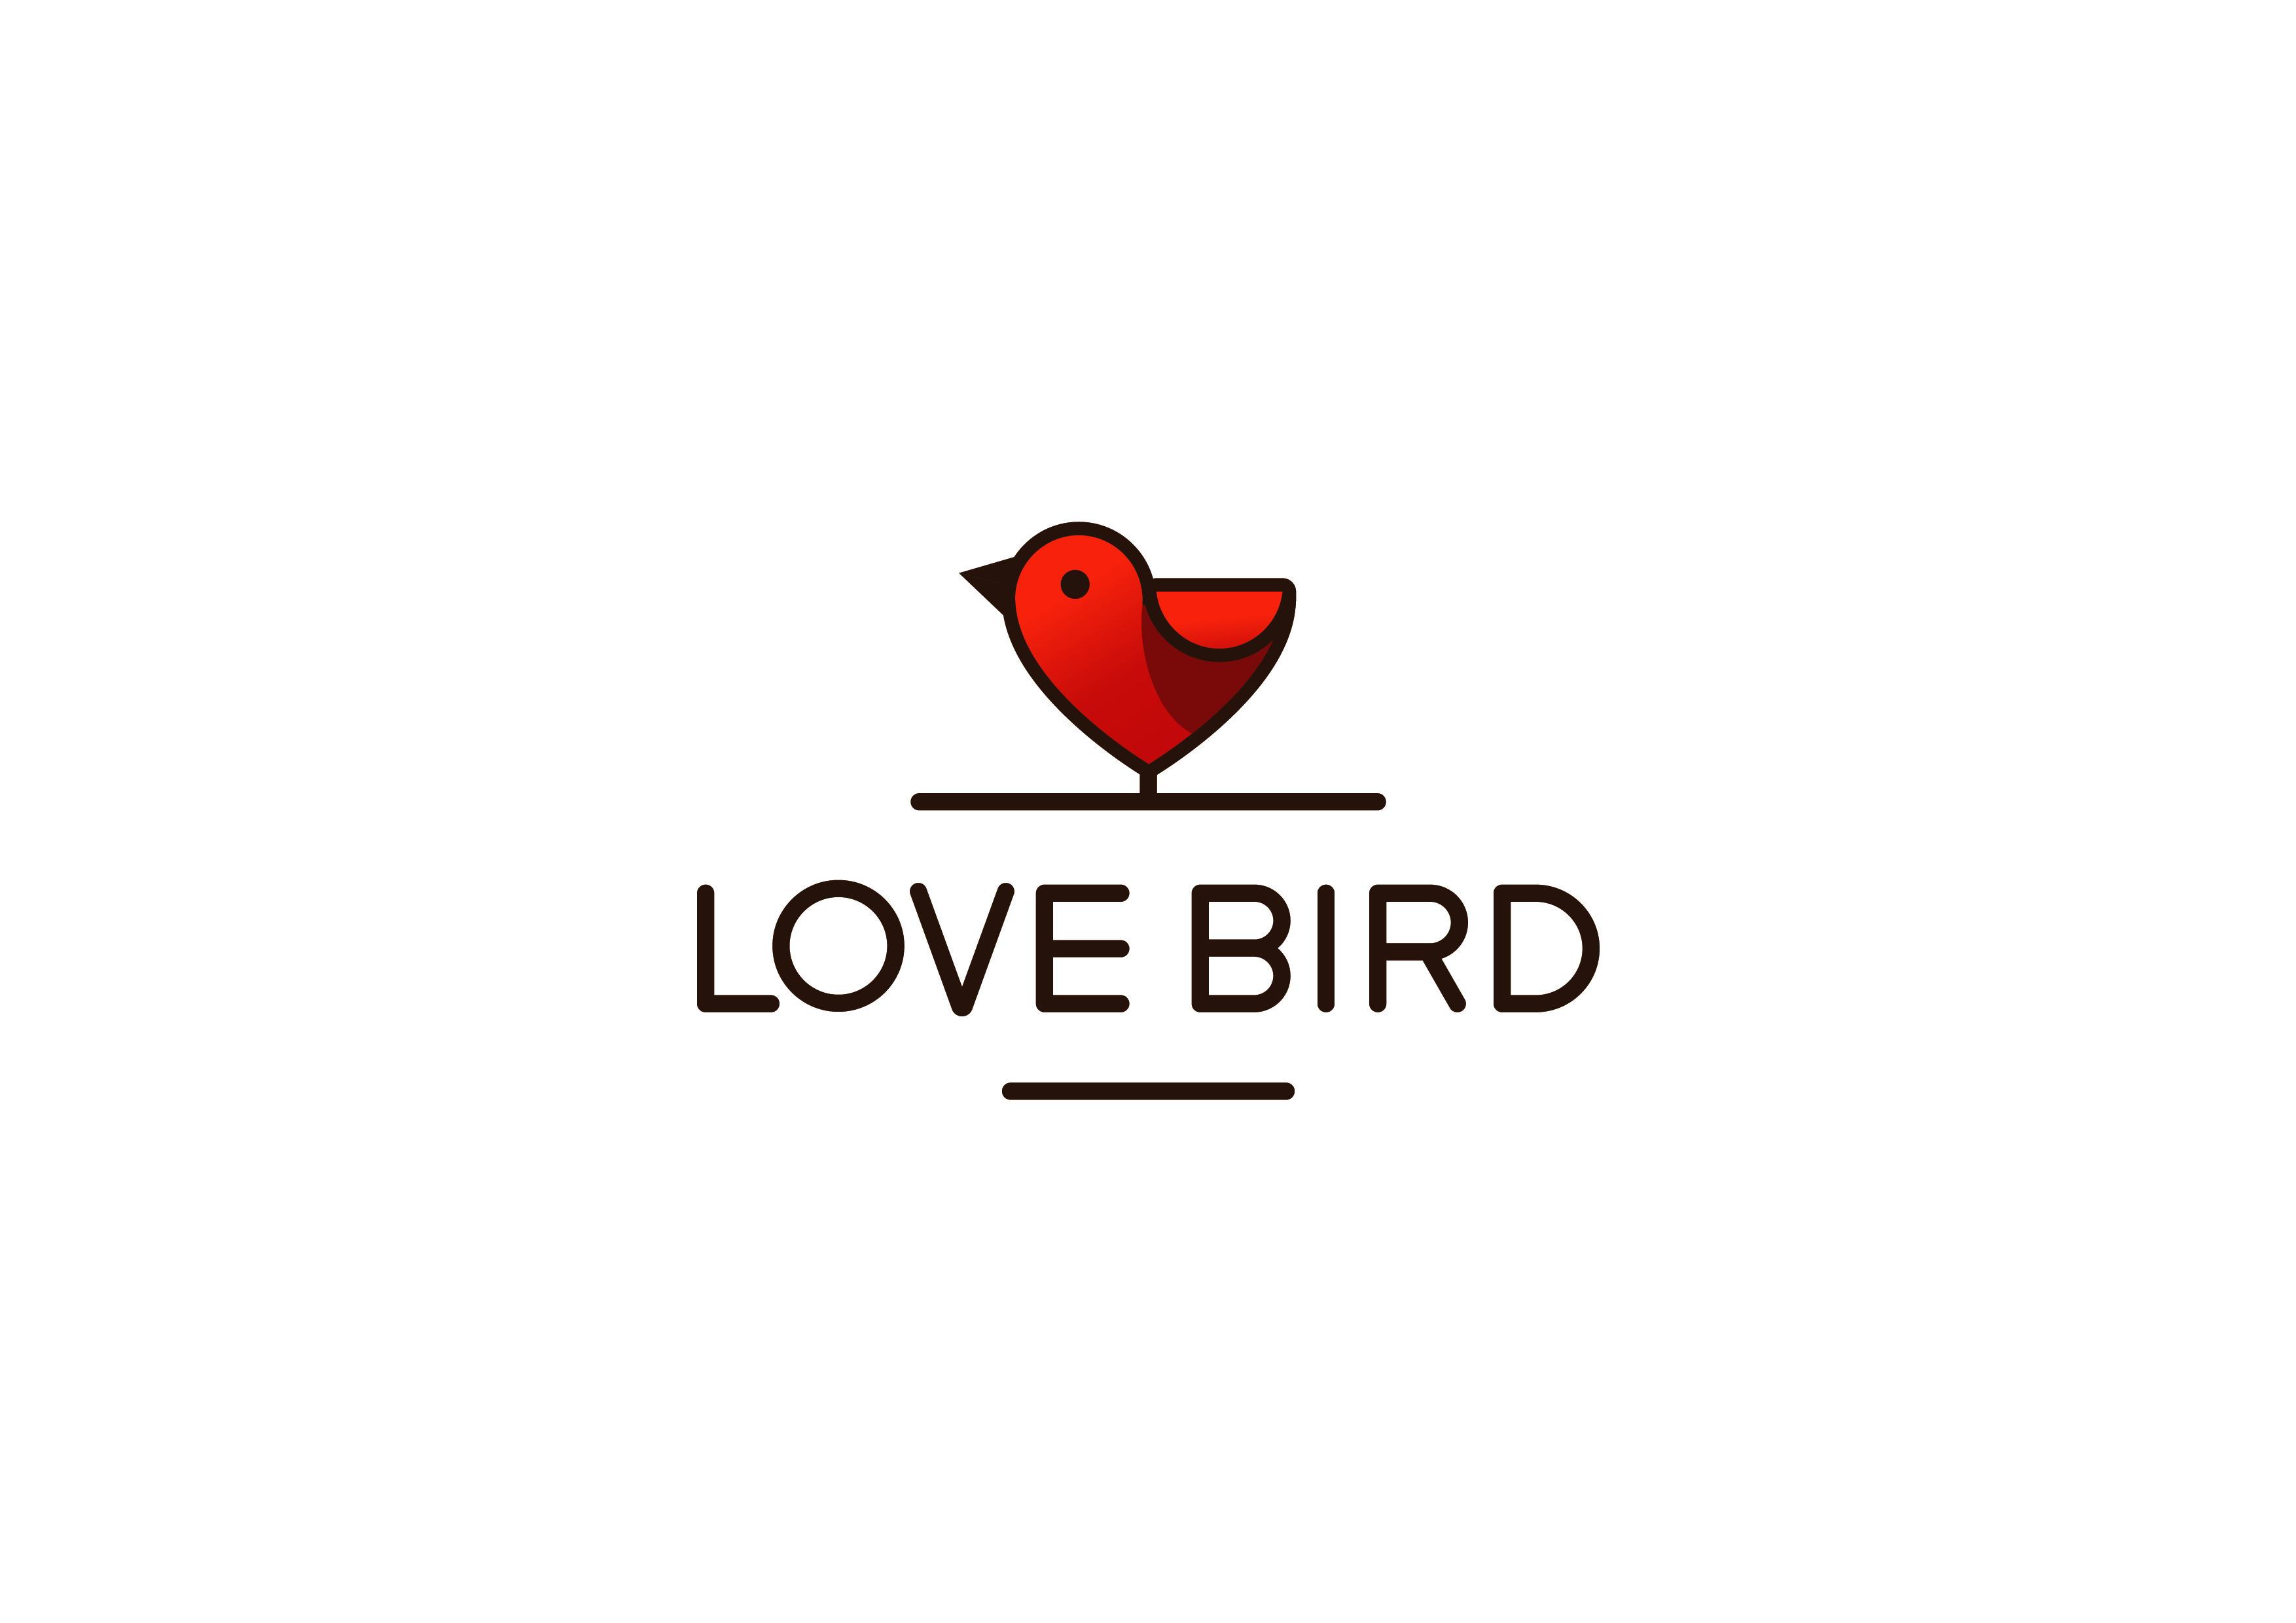 Love Bird Logo - Love Bird | M Y L O G O S 2 0 1 4 - 2 0 1 5 | Pinterest | Logos ...